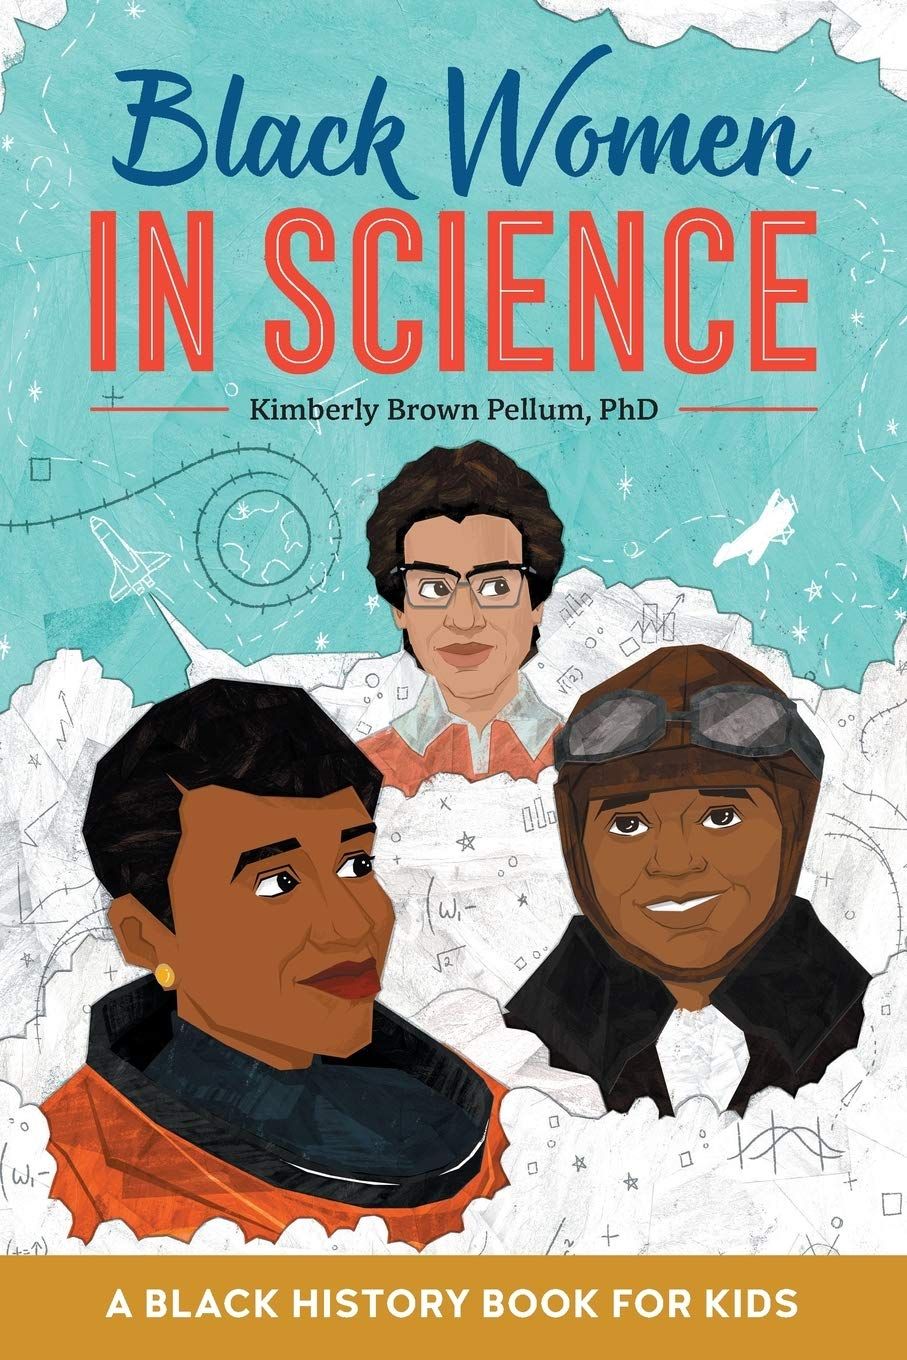 Black Women in science cover